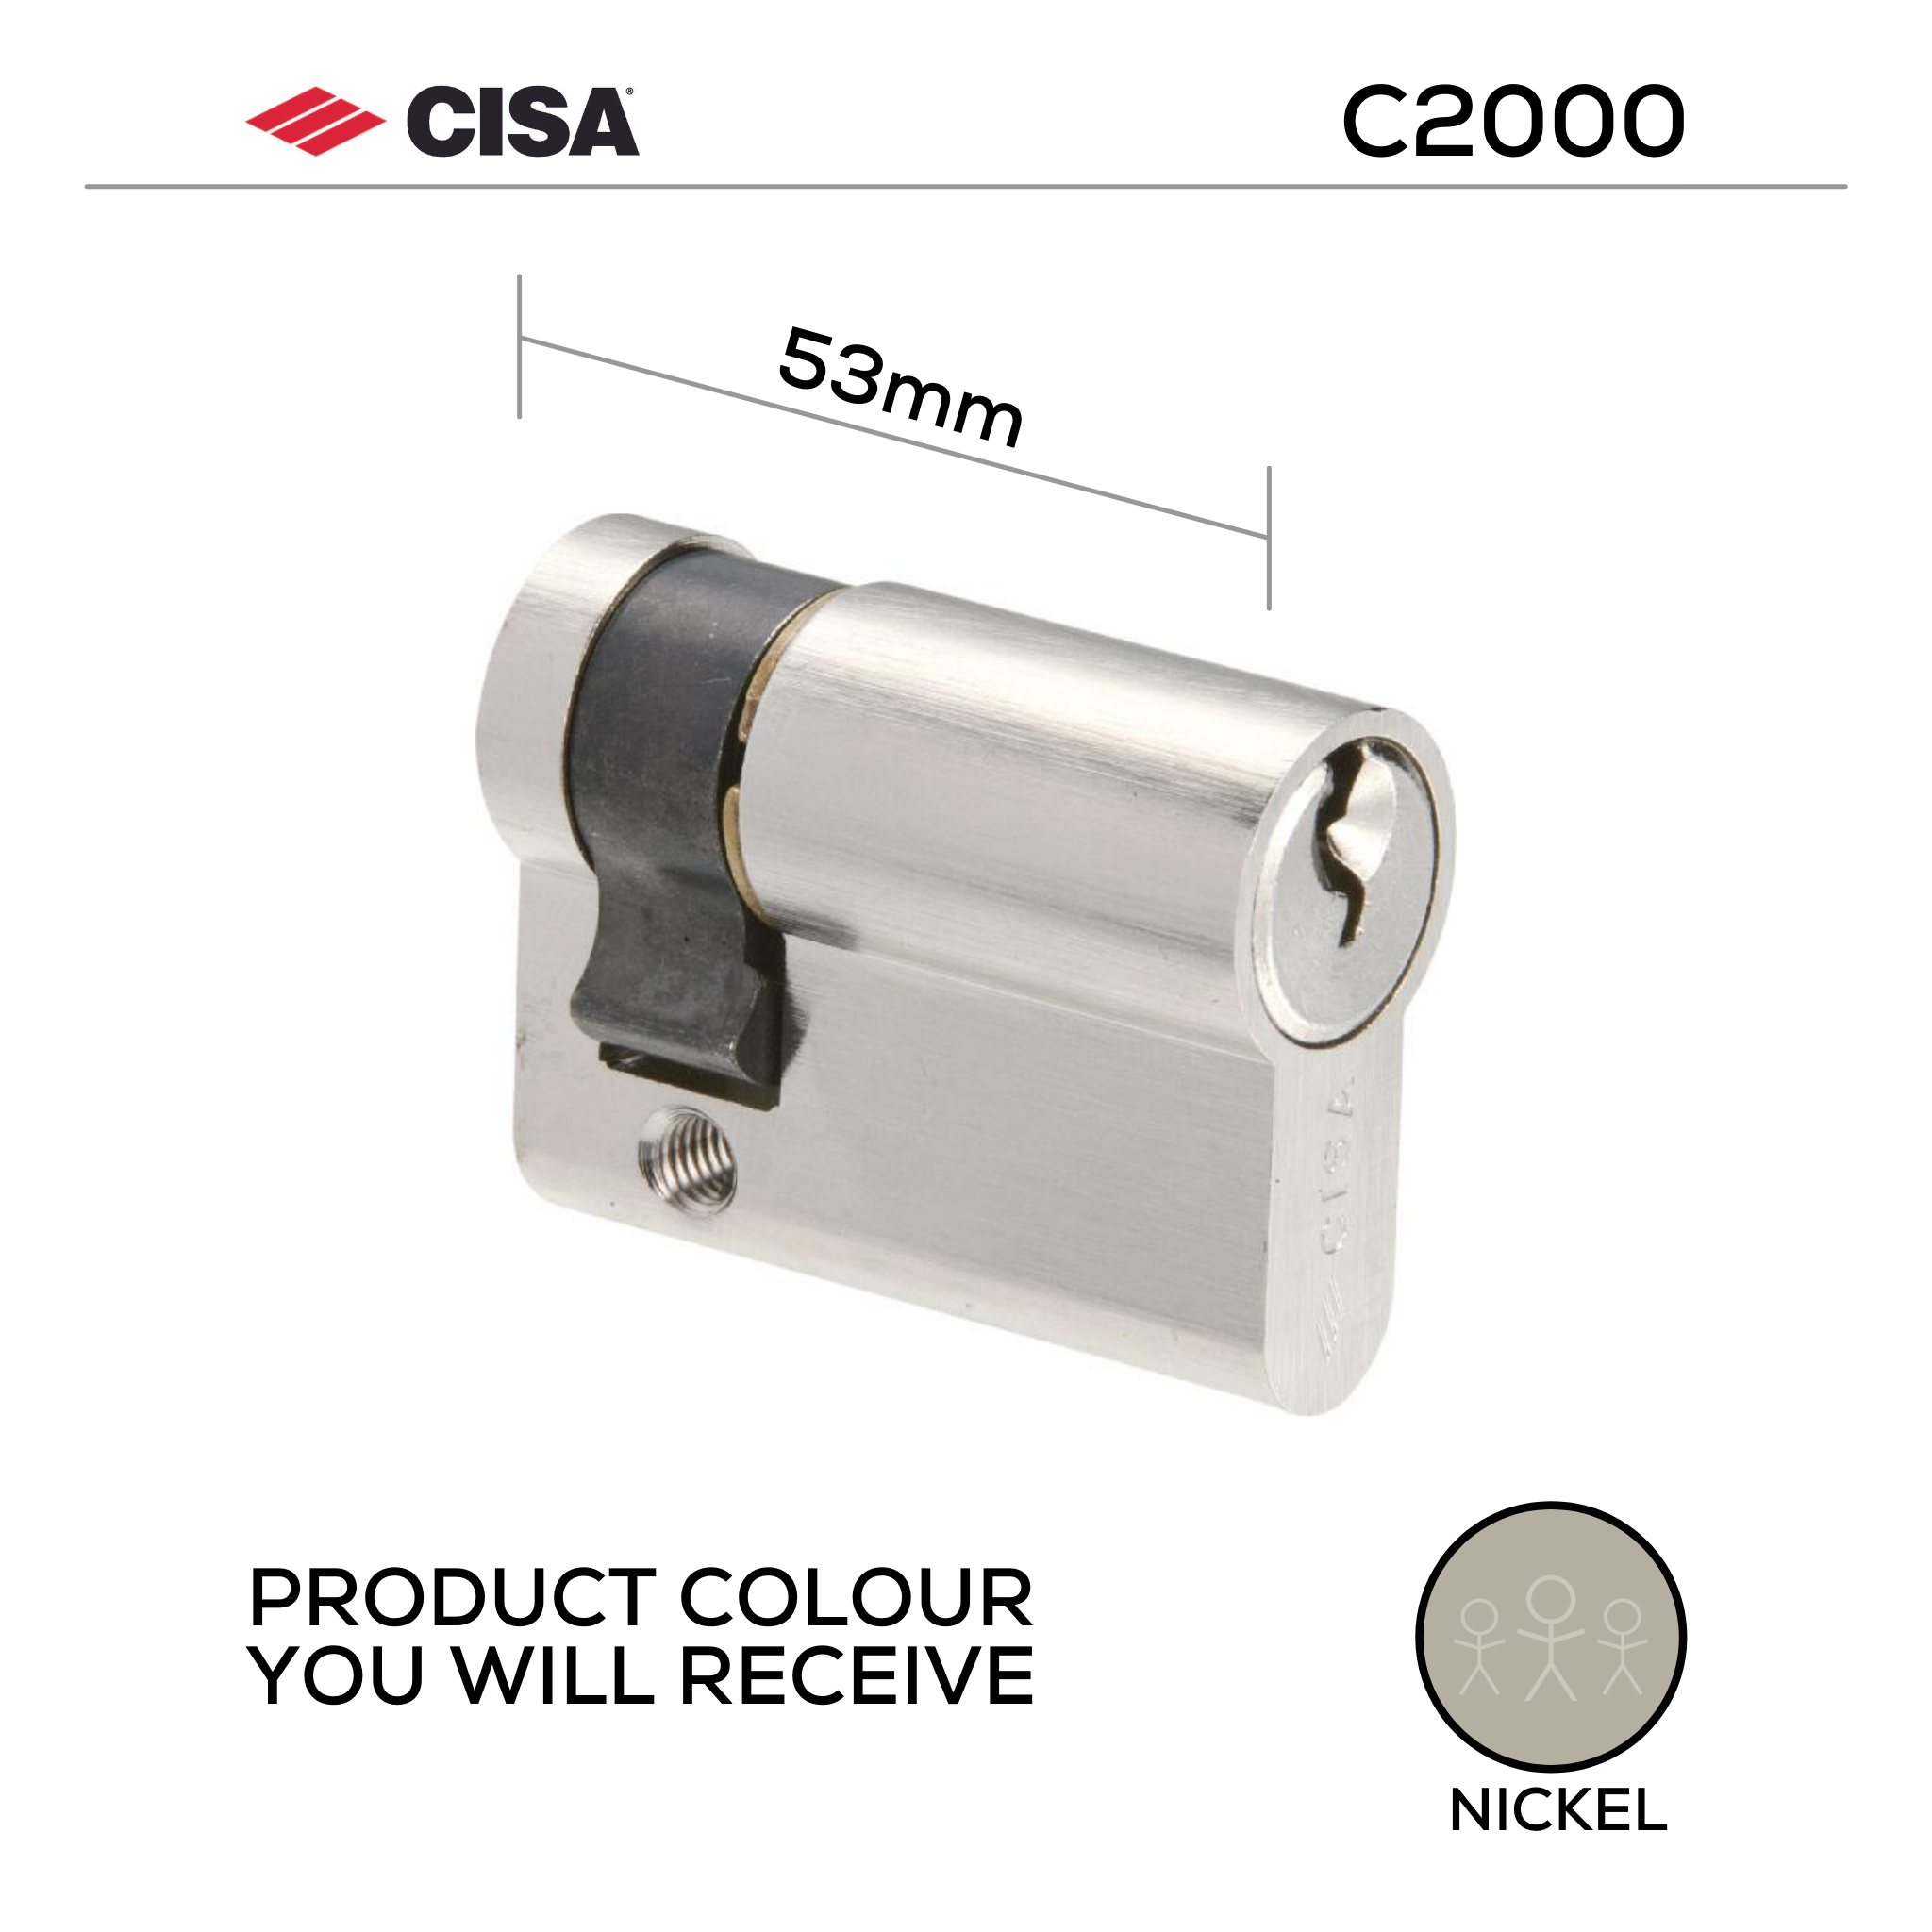 0G304-11-12-KD, 53mm - 42.5/10, Half (Single Cylinder), C2000, Key, Keyed to Differ (Standard), 3 Keys, 5 Pin, Nickel, CISA